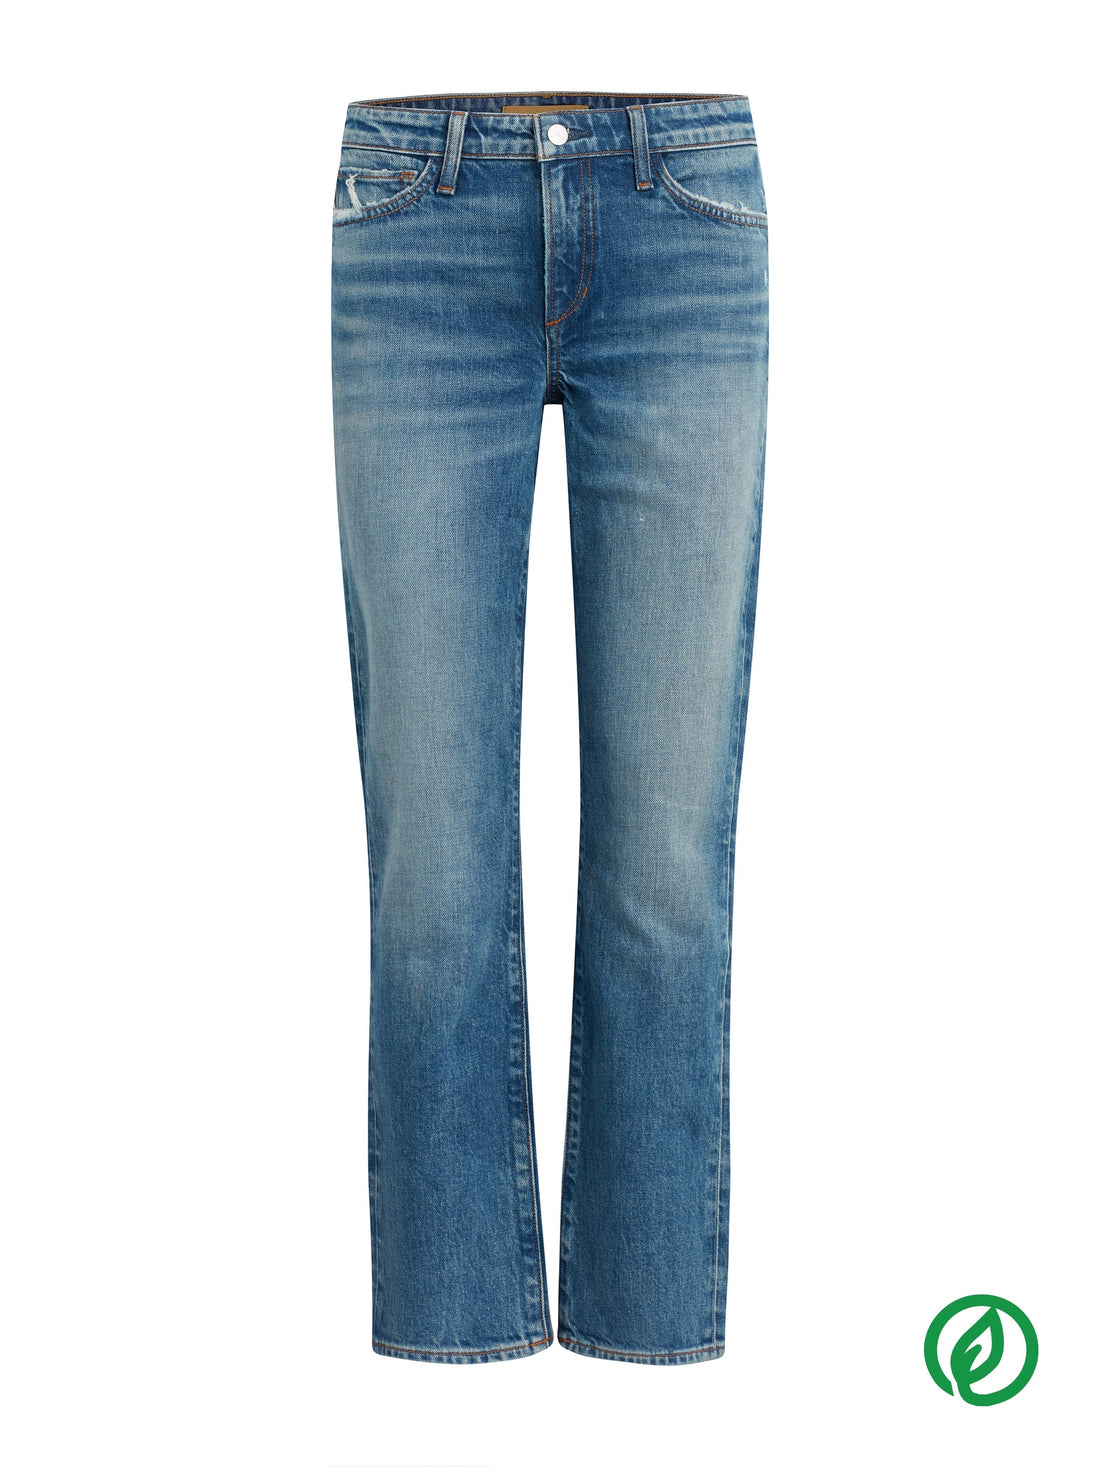 Lara Mid Rise Skinny Jeans - FINAL SALE - Premium Denim Denim from Joe's - Just $75! Shop now at shopthedenimbar